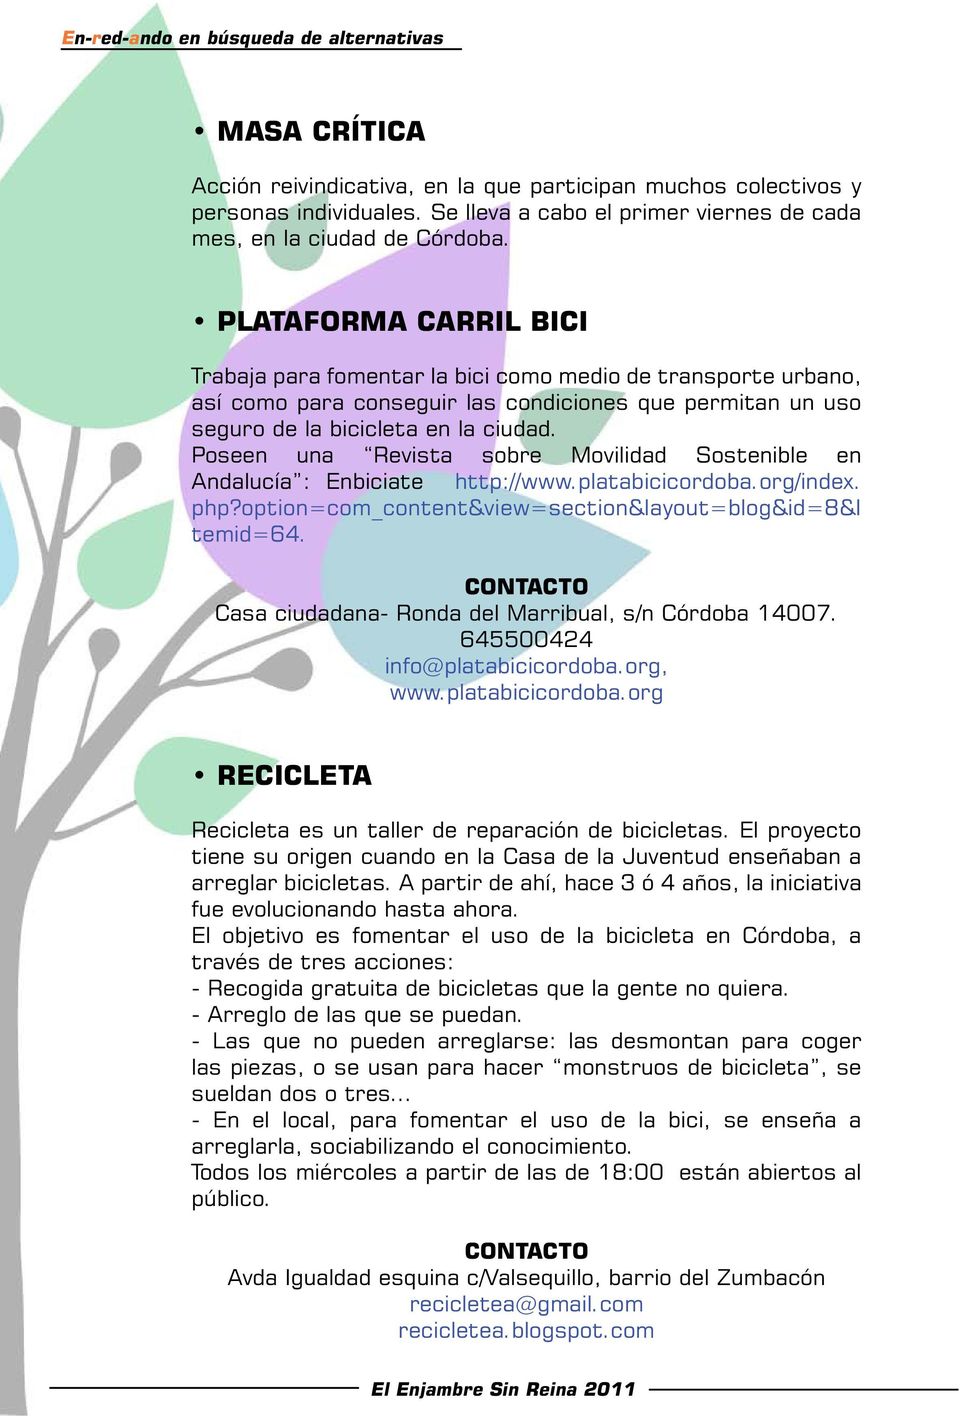 Poseen una Revista sobre Movilidad Sostenible en Andalucía : Enbiciate http://www.platabicicordoba.org/index. php?option=com_content&view=section&layout=blog&id=8&i temid=64.